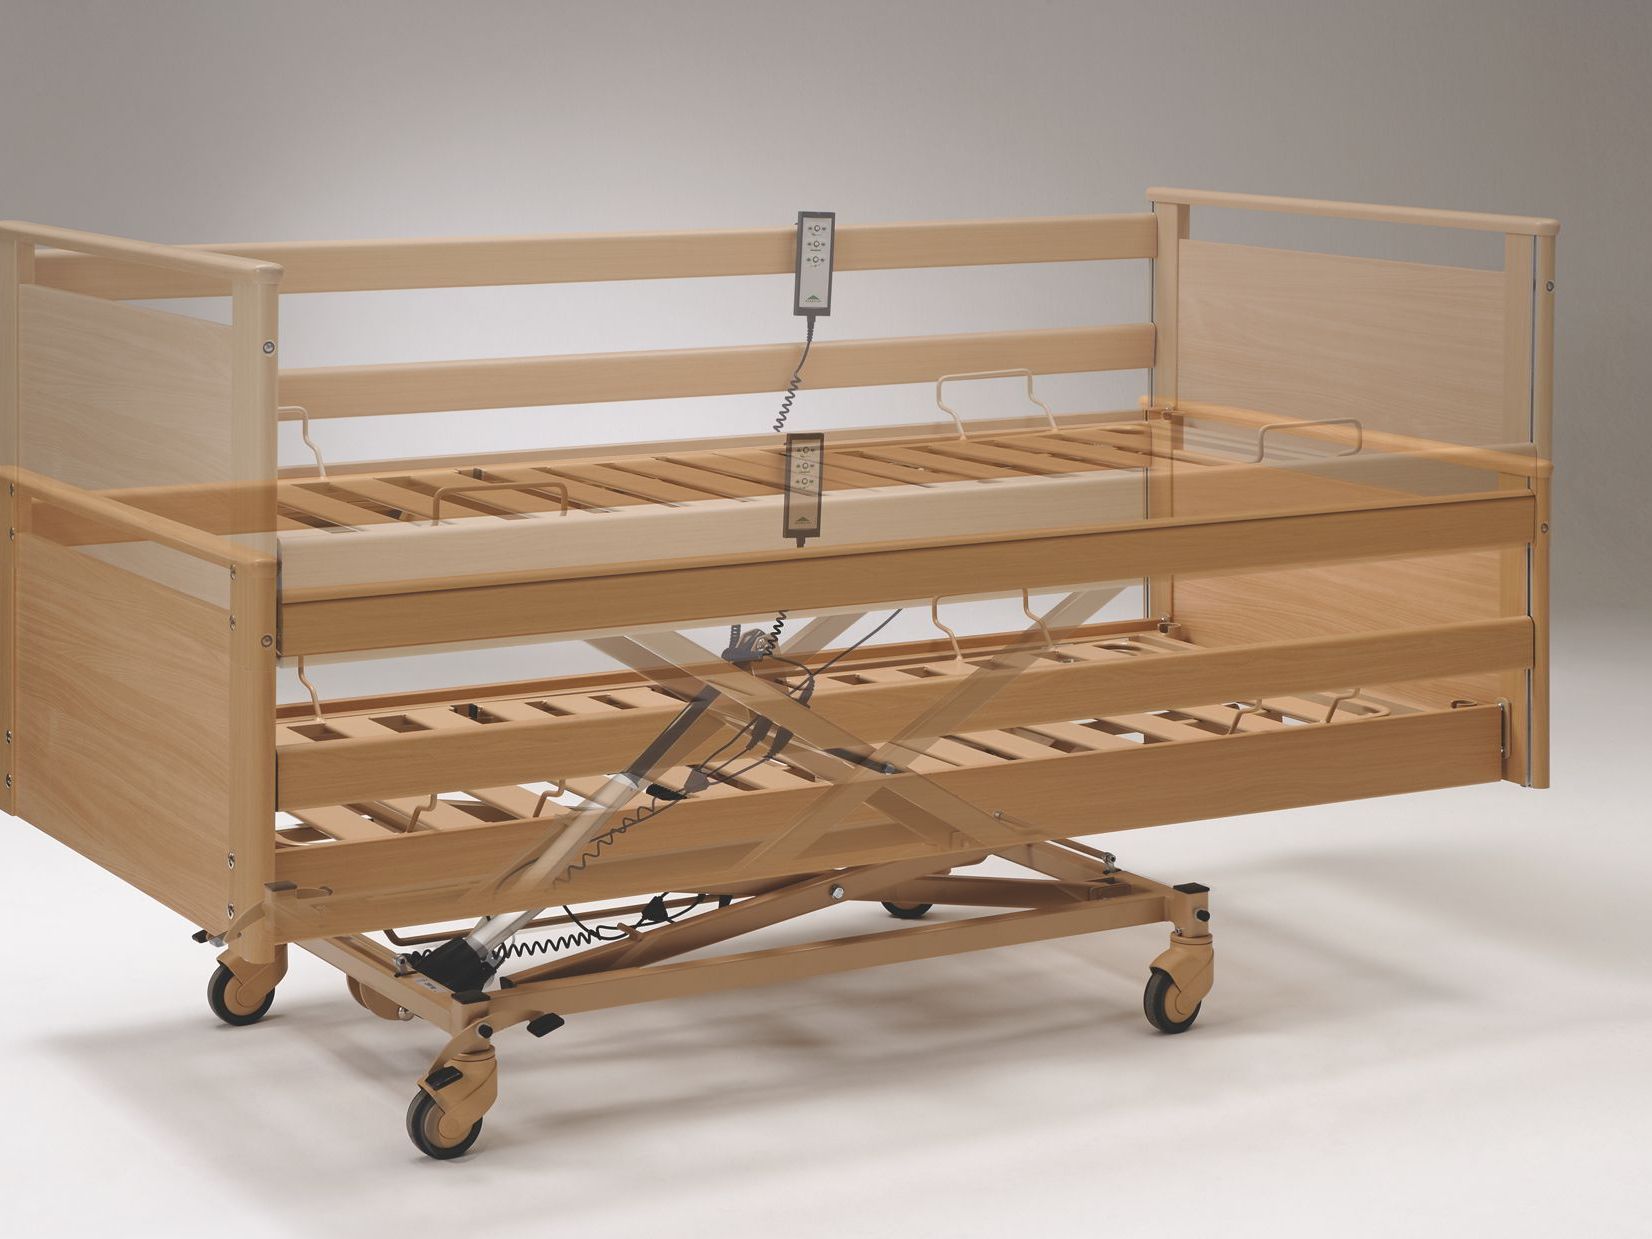 Large height adjustment range of the Westfalia-Klassik care bed